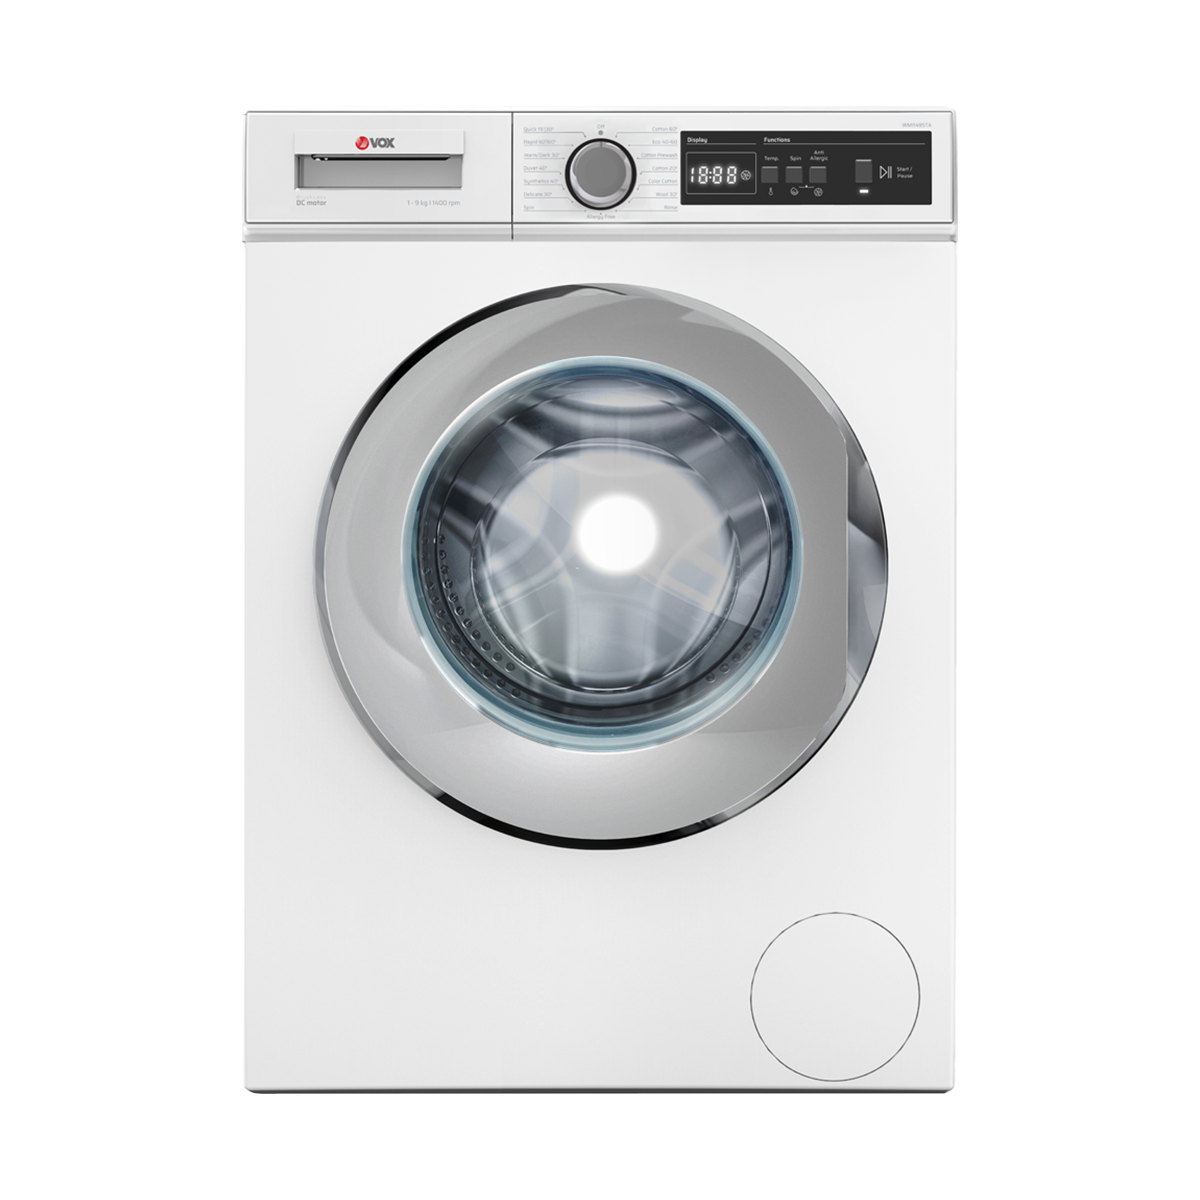 Washing machine WMI1495-TA 